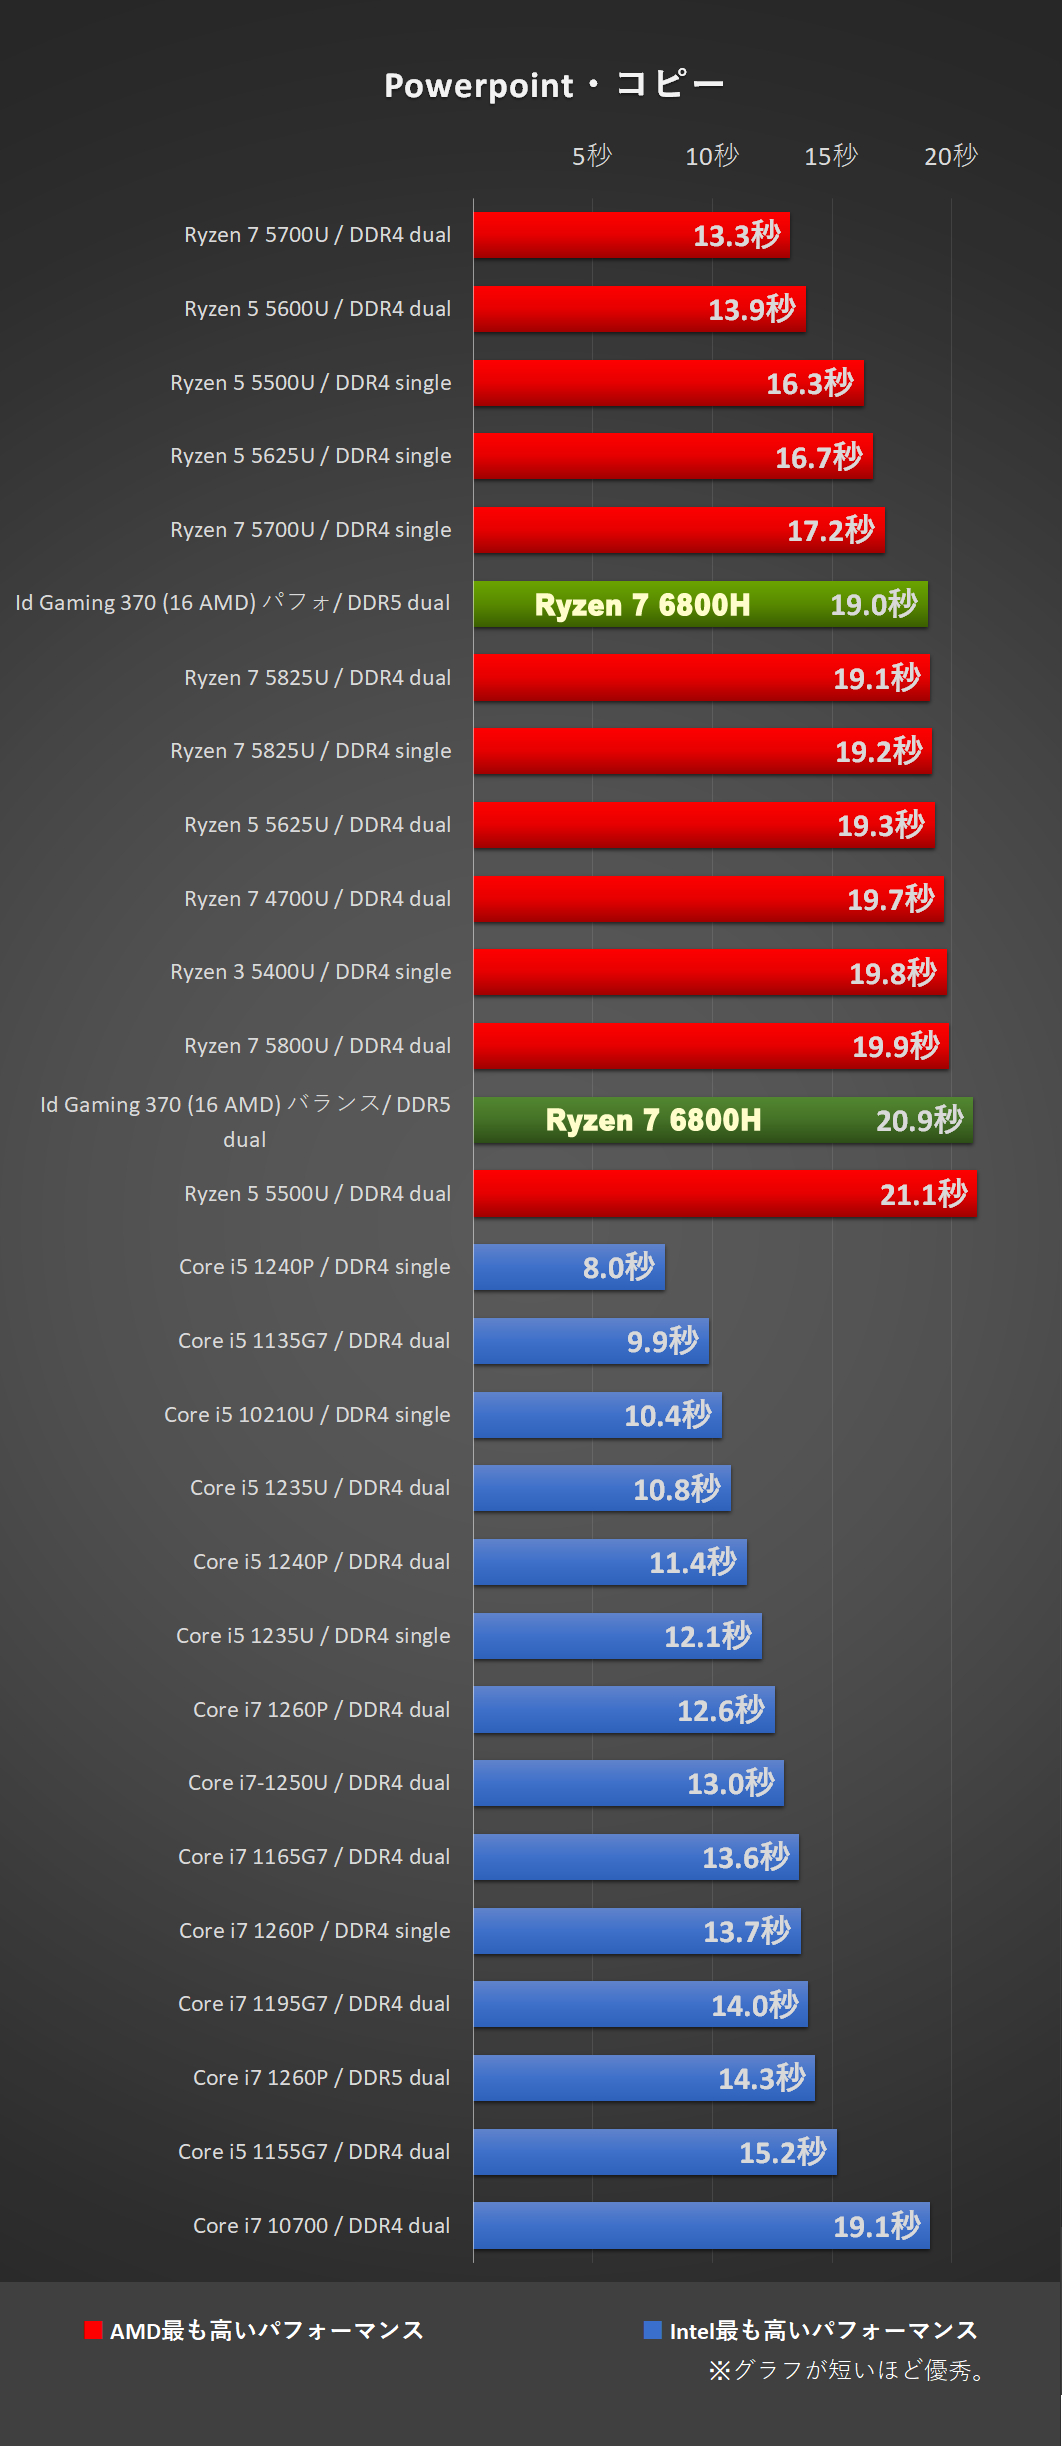 「IdeaPad Gaming 370 (16型 AMD)」Ryzen 7 6800Hにて、Powerpoint・コピー処理時間比較